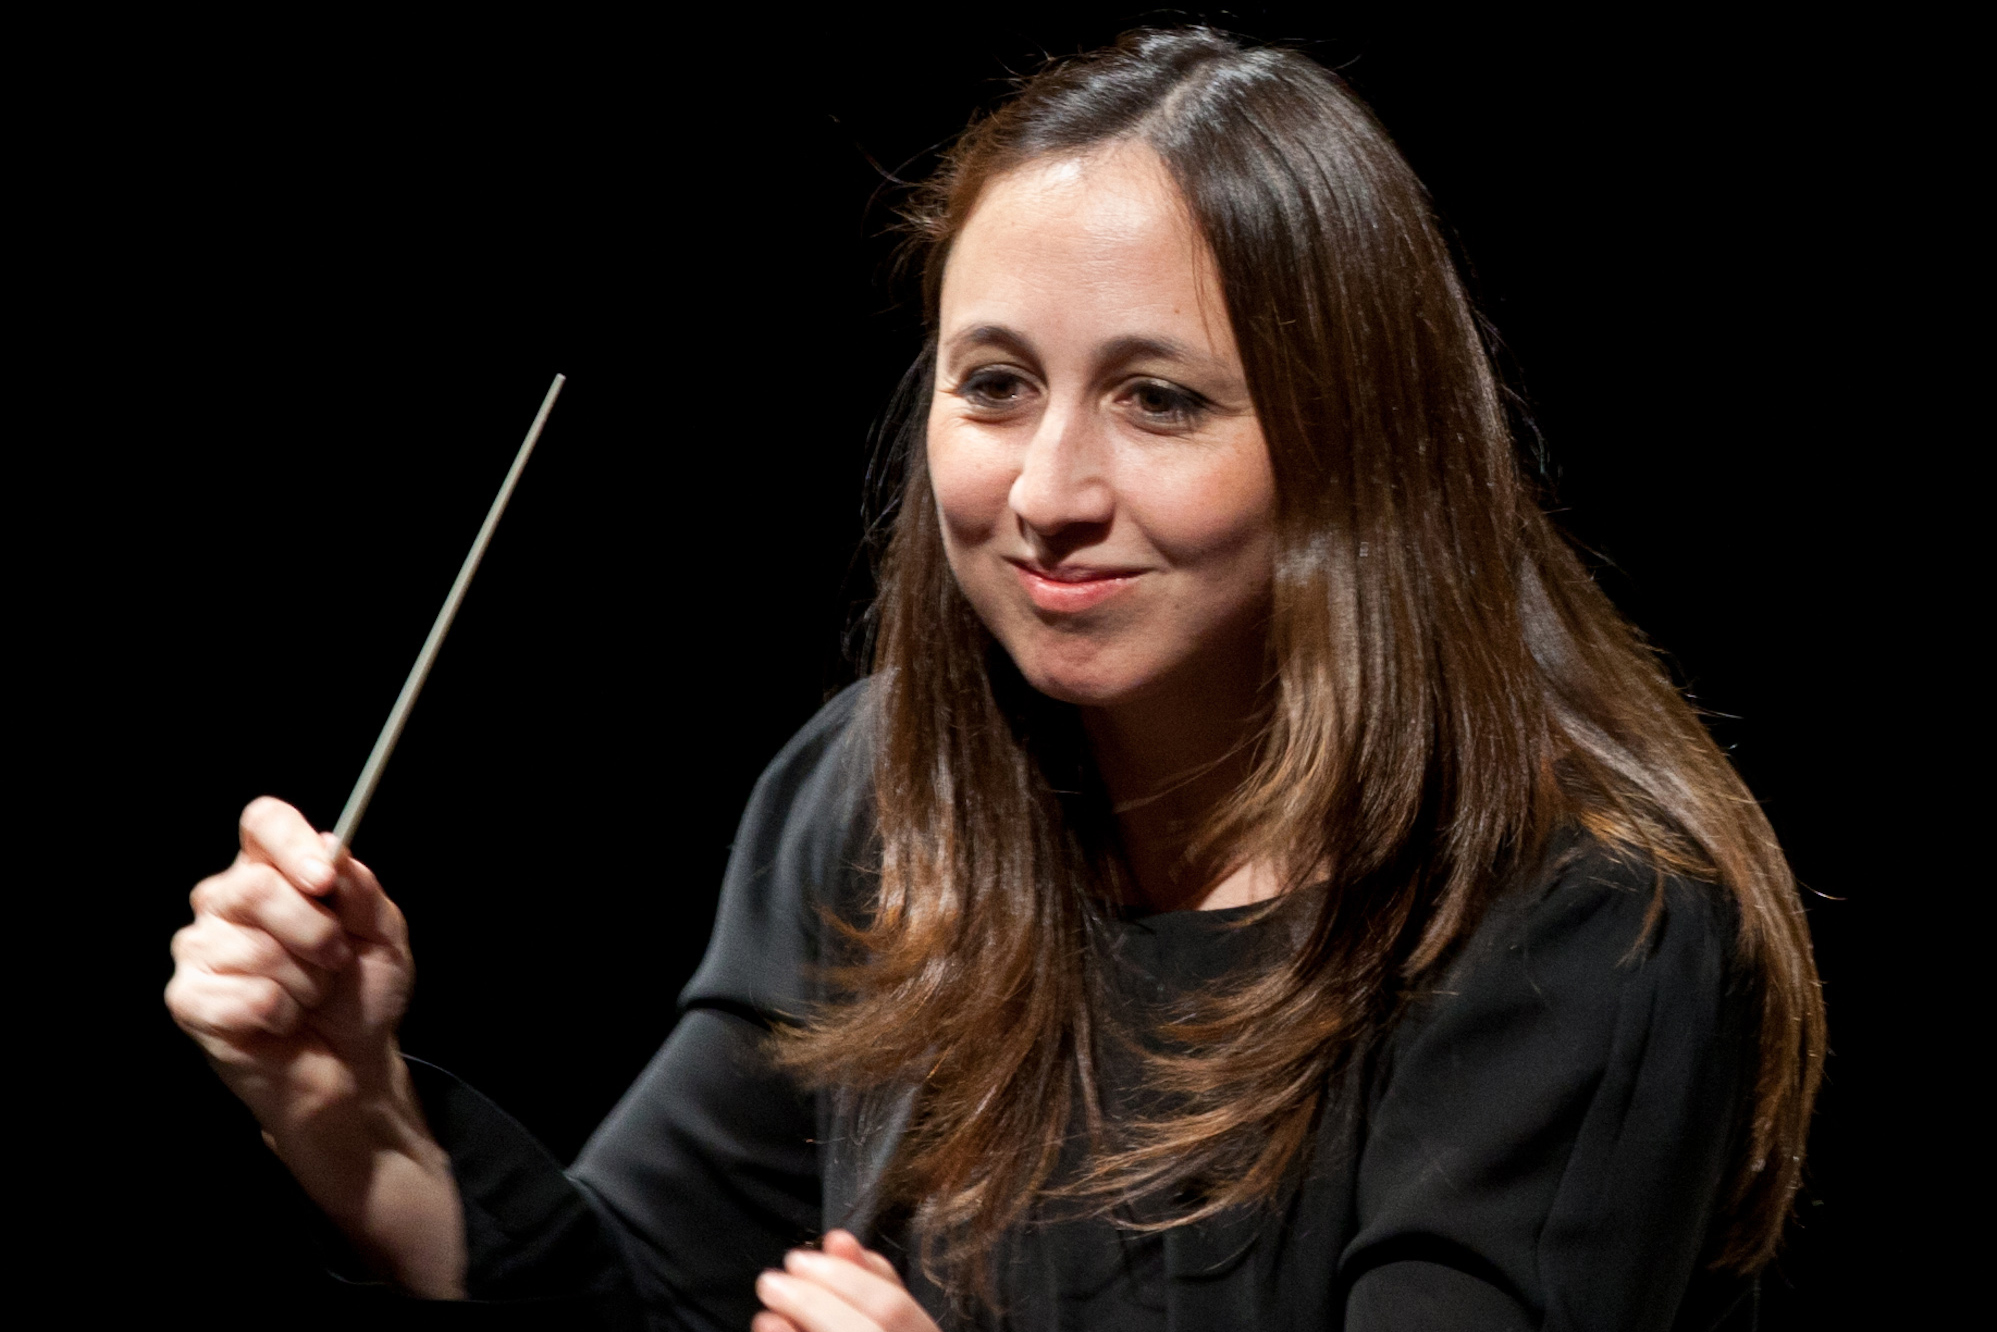 Joana Carneiro conducting against a dark background